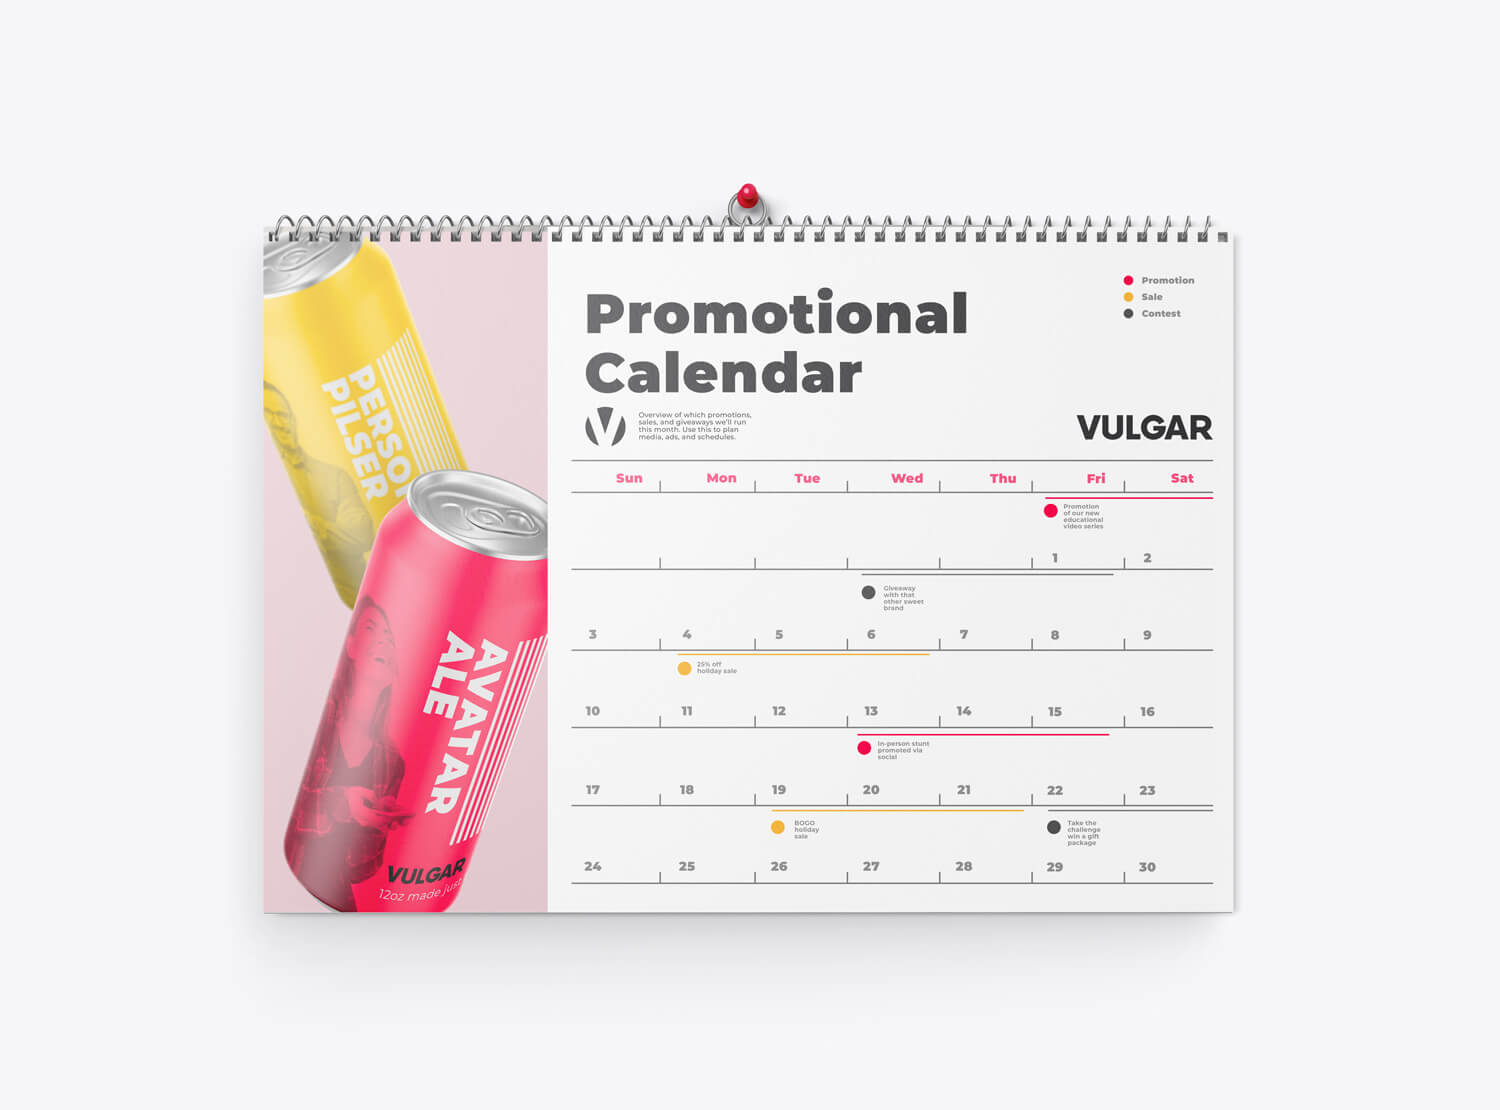 How to make promotional calendar